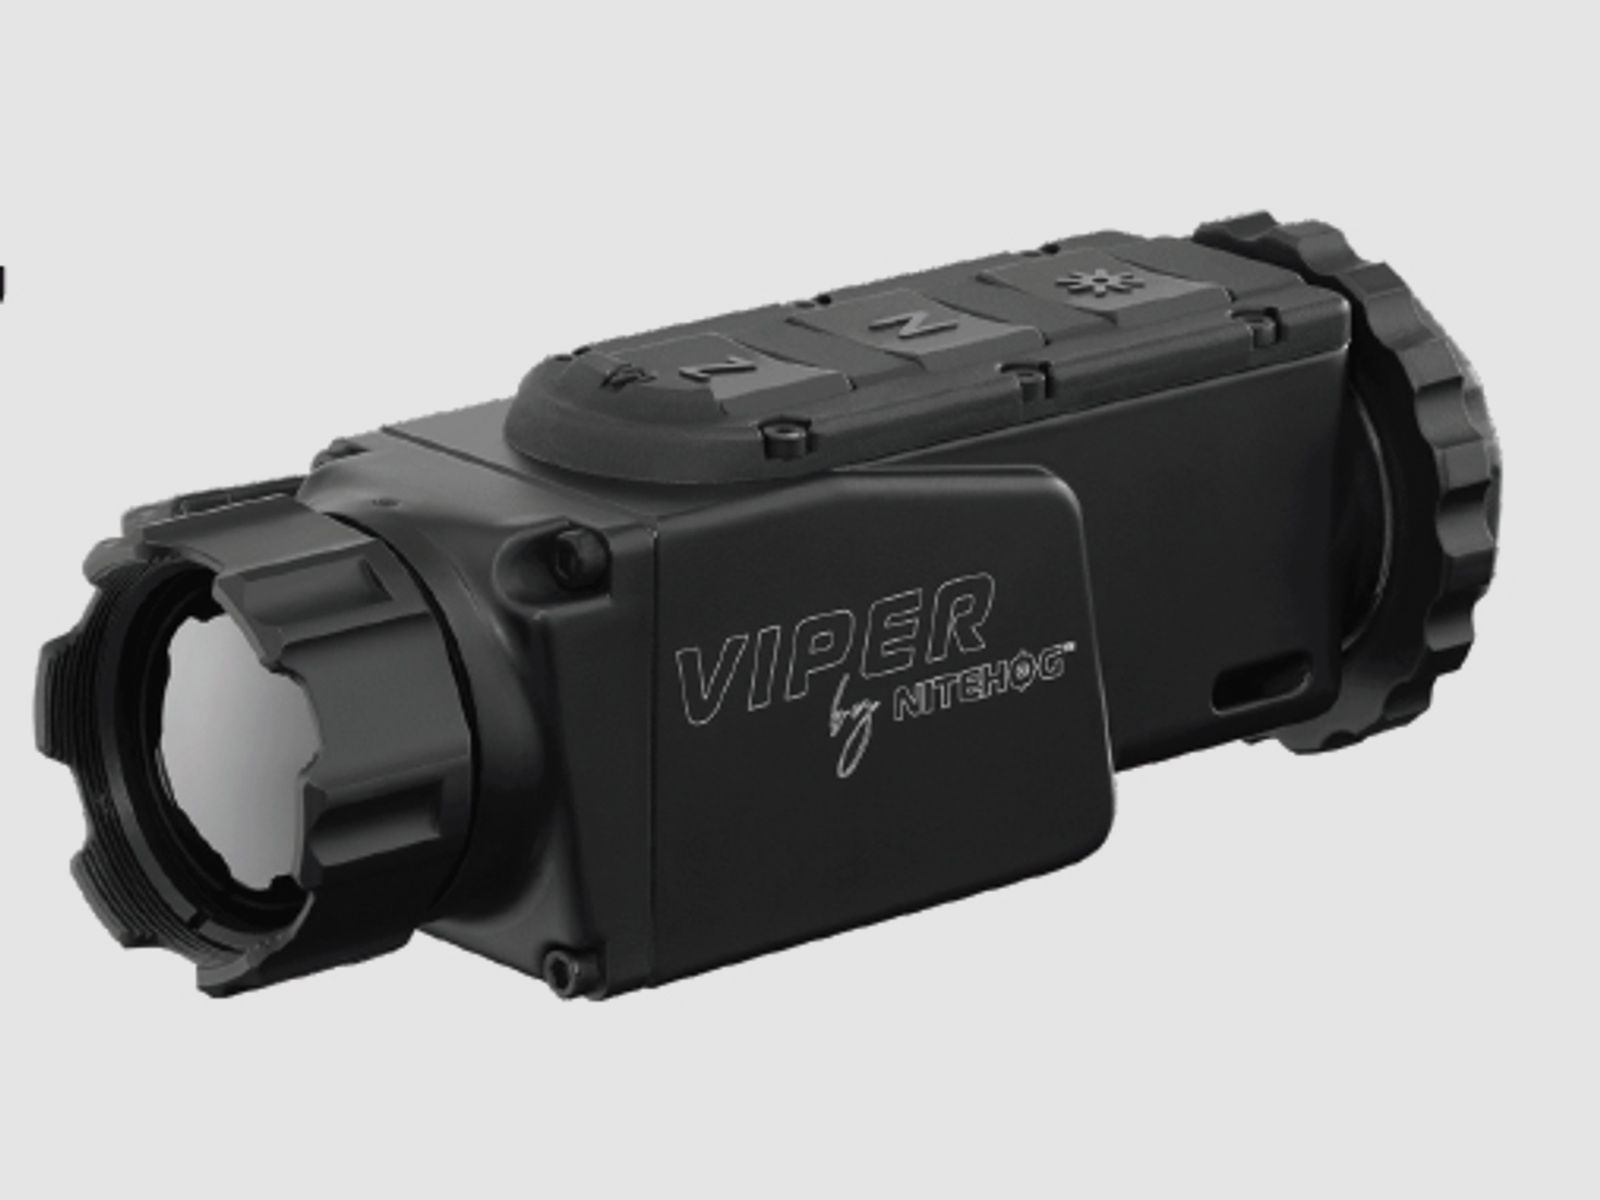 Nitehog Nachtsichtgerät TIR-M35 XC Viper